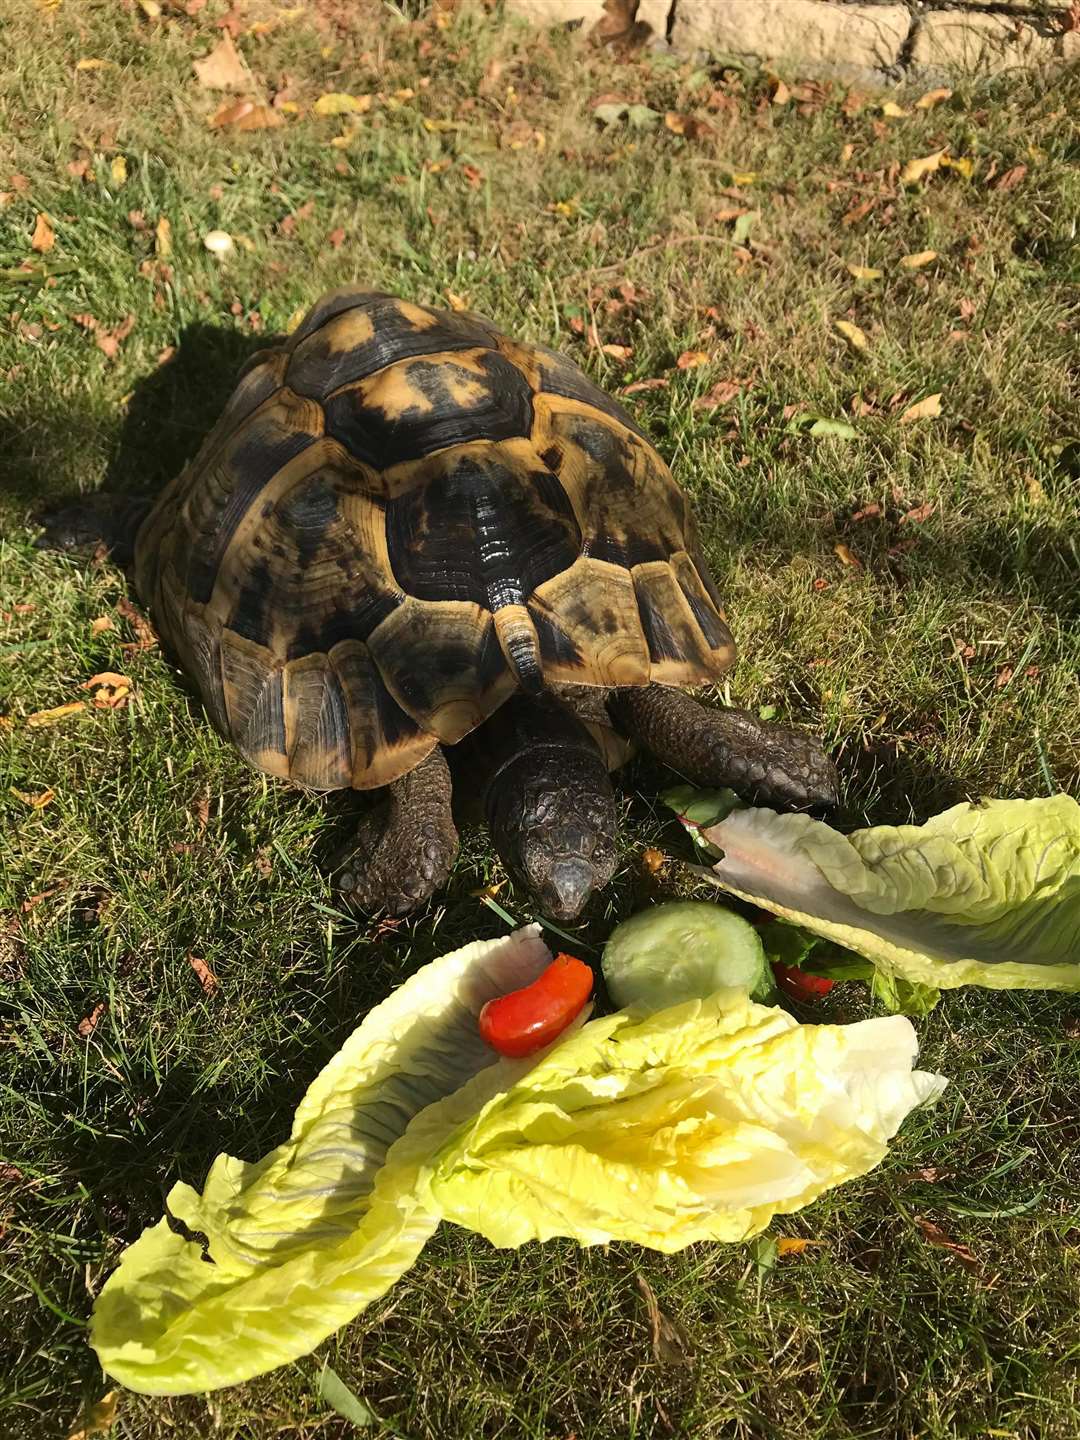 Shelly the tortoise eating her big dinner last night (3404709)